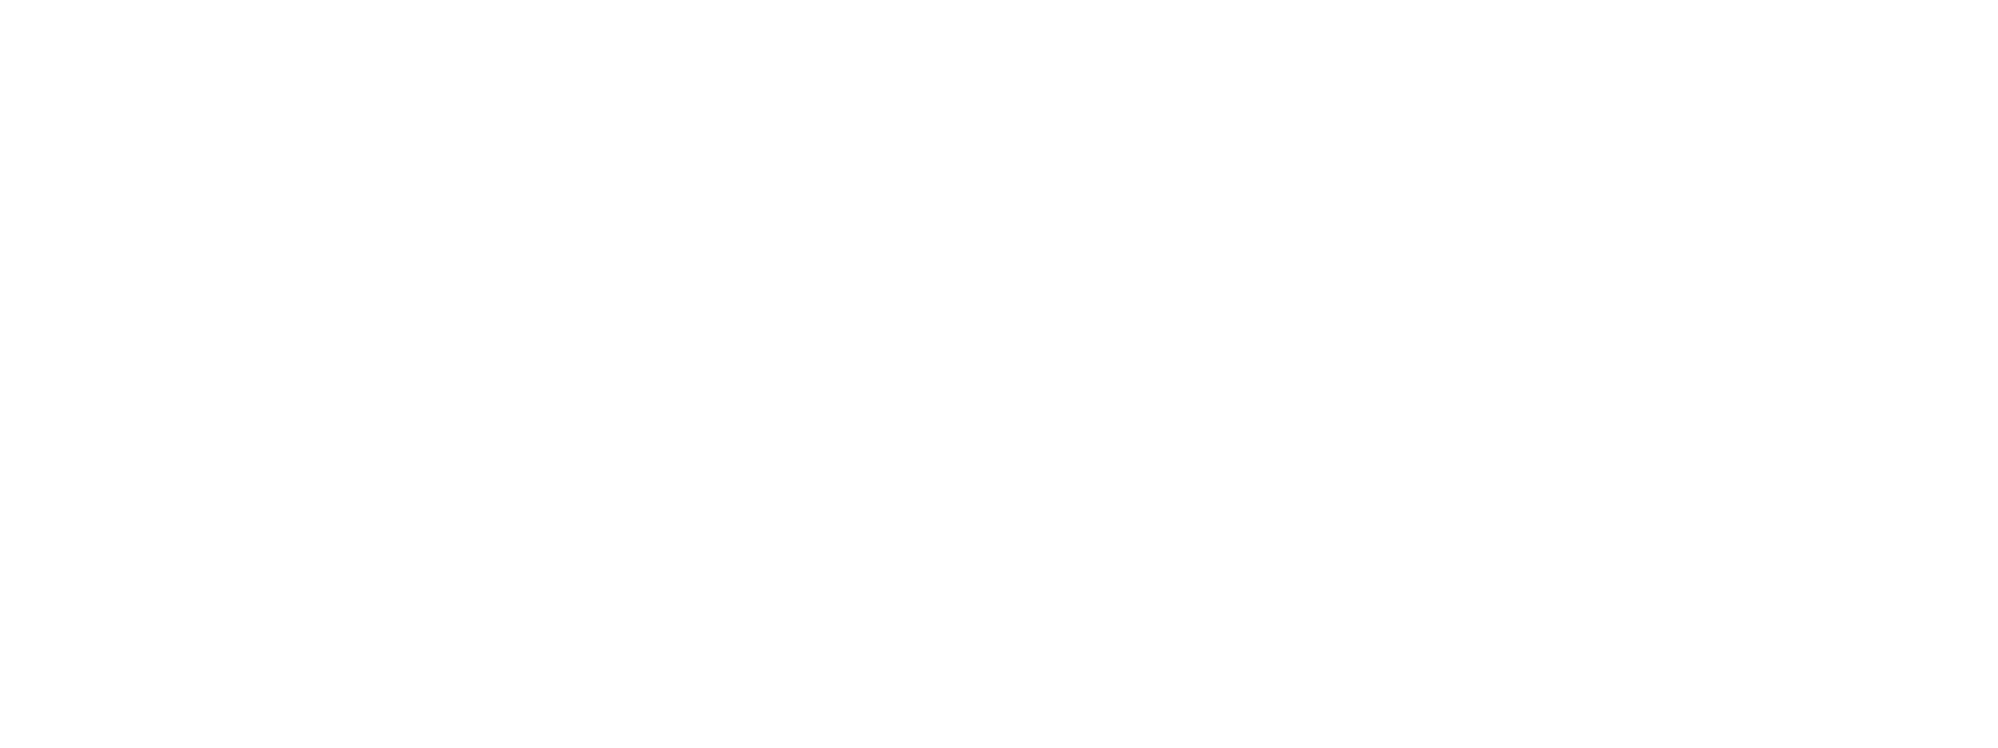 supercuts logo